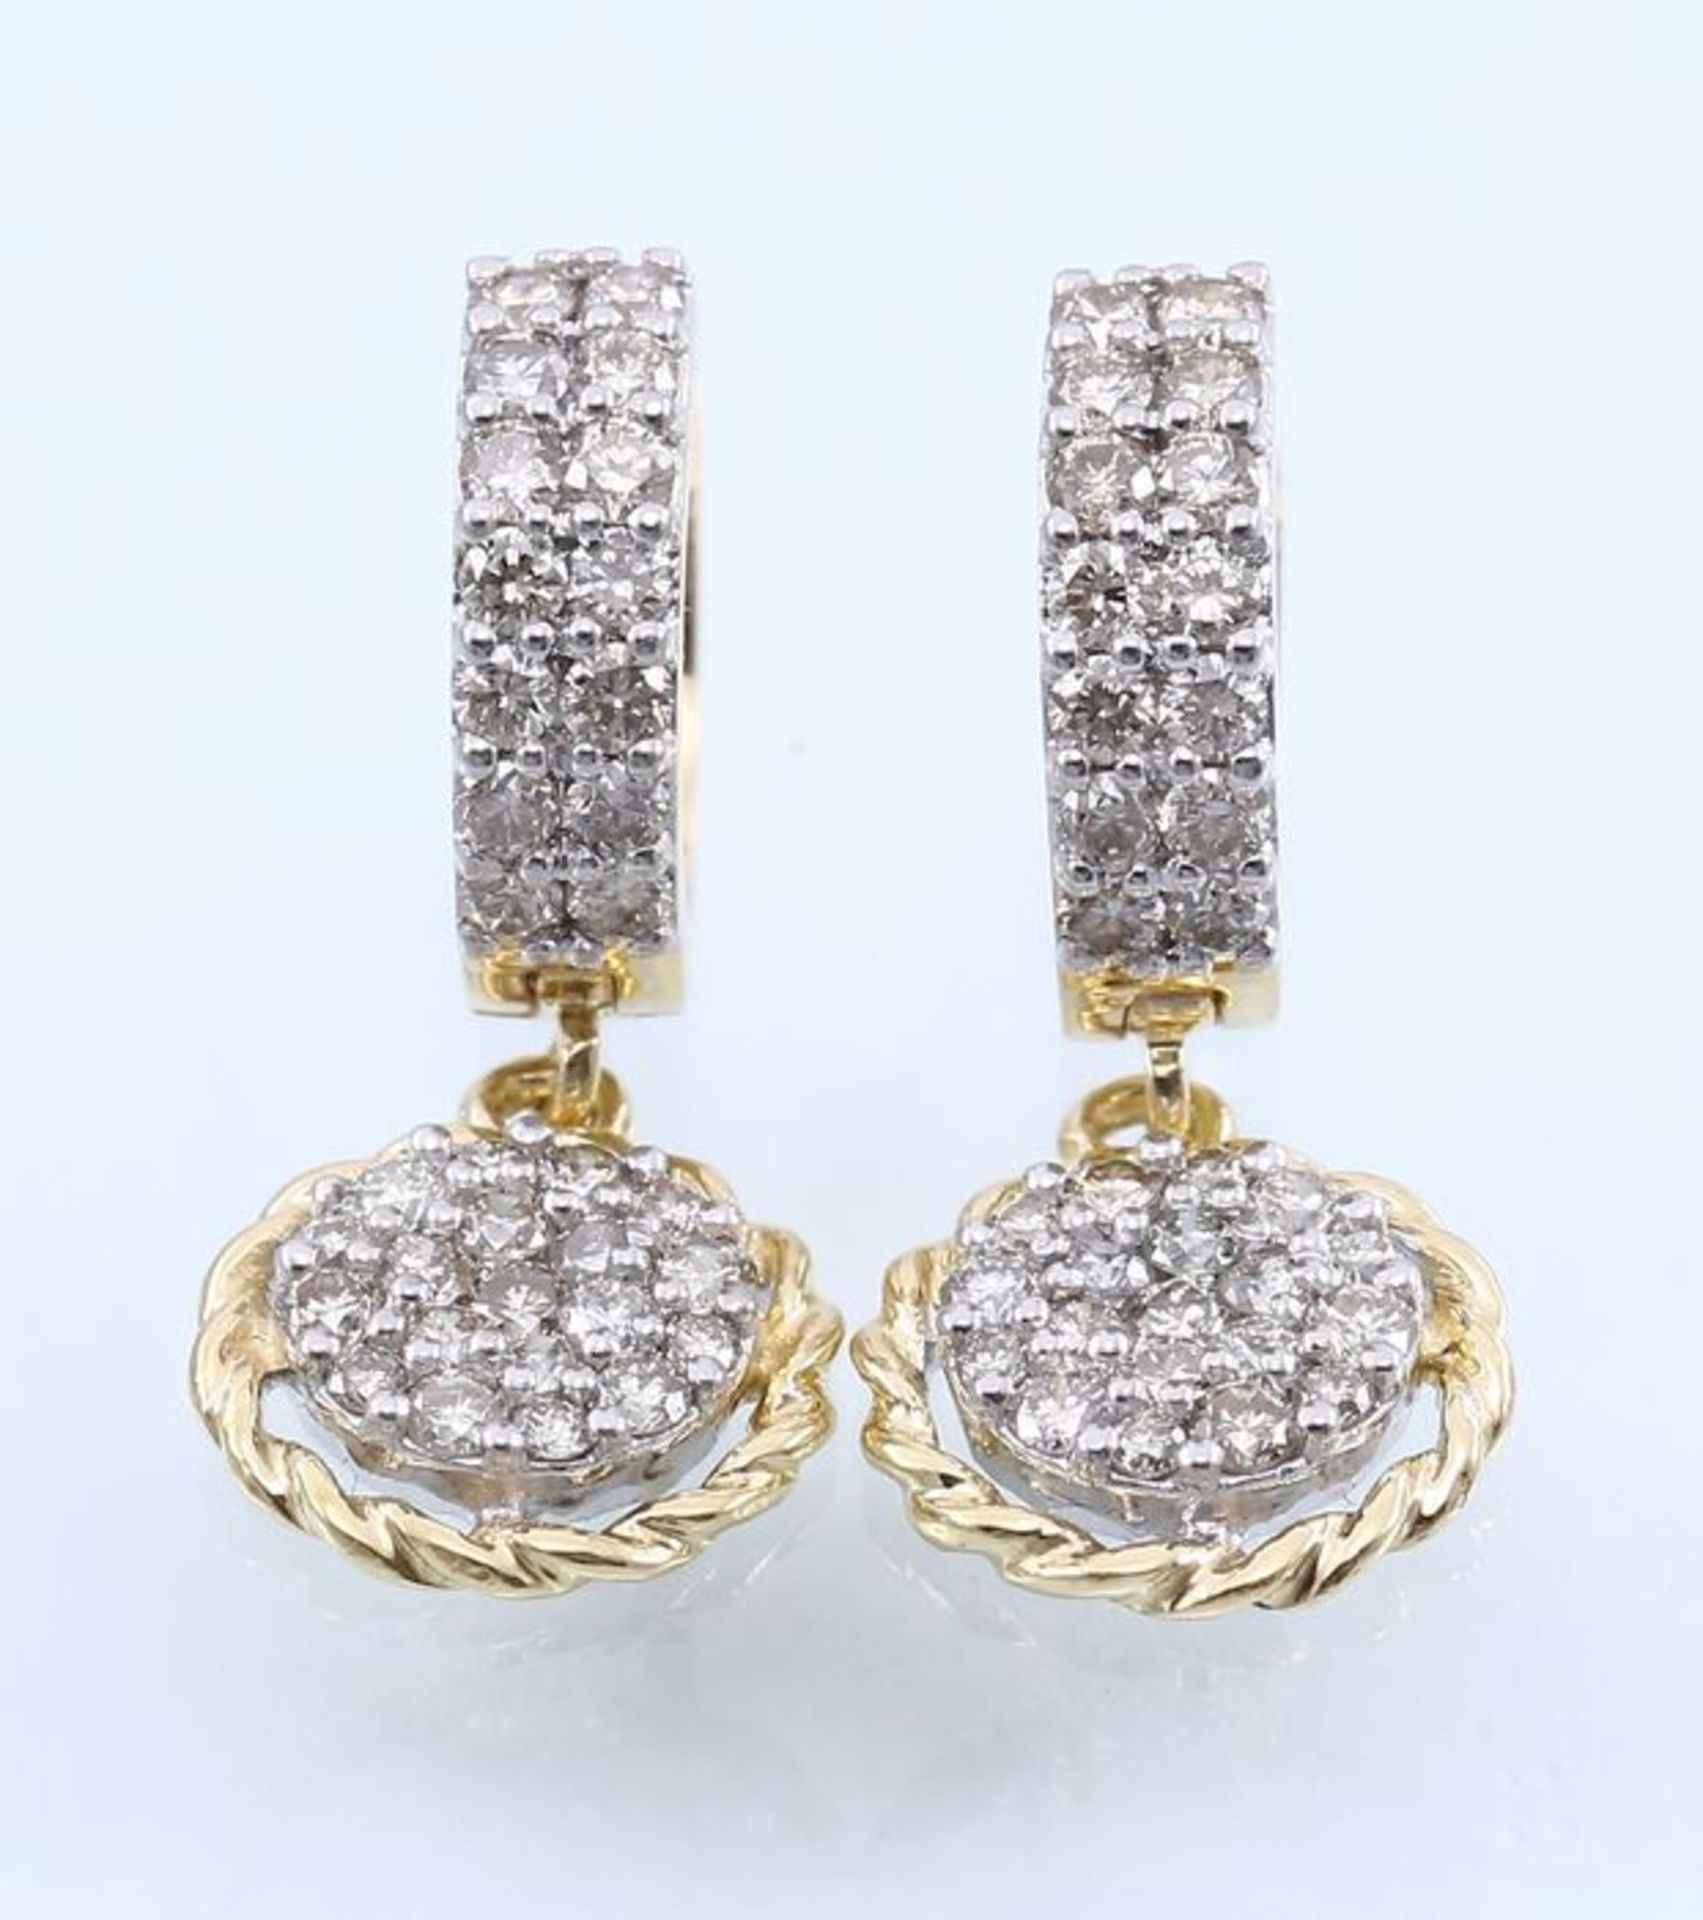 IGI Certified 18 K / 750 Yellow Gold Diamond Earrings - Image 6 of 7